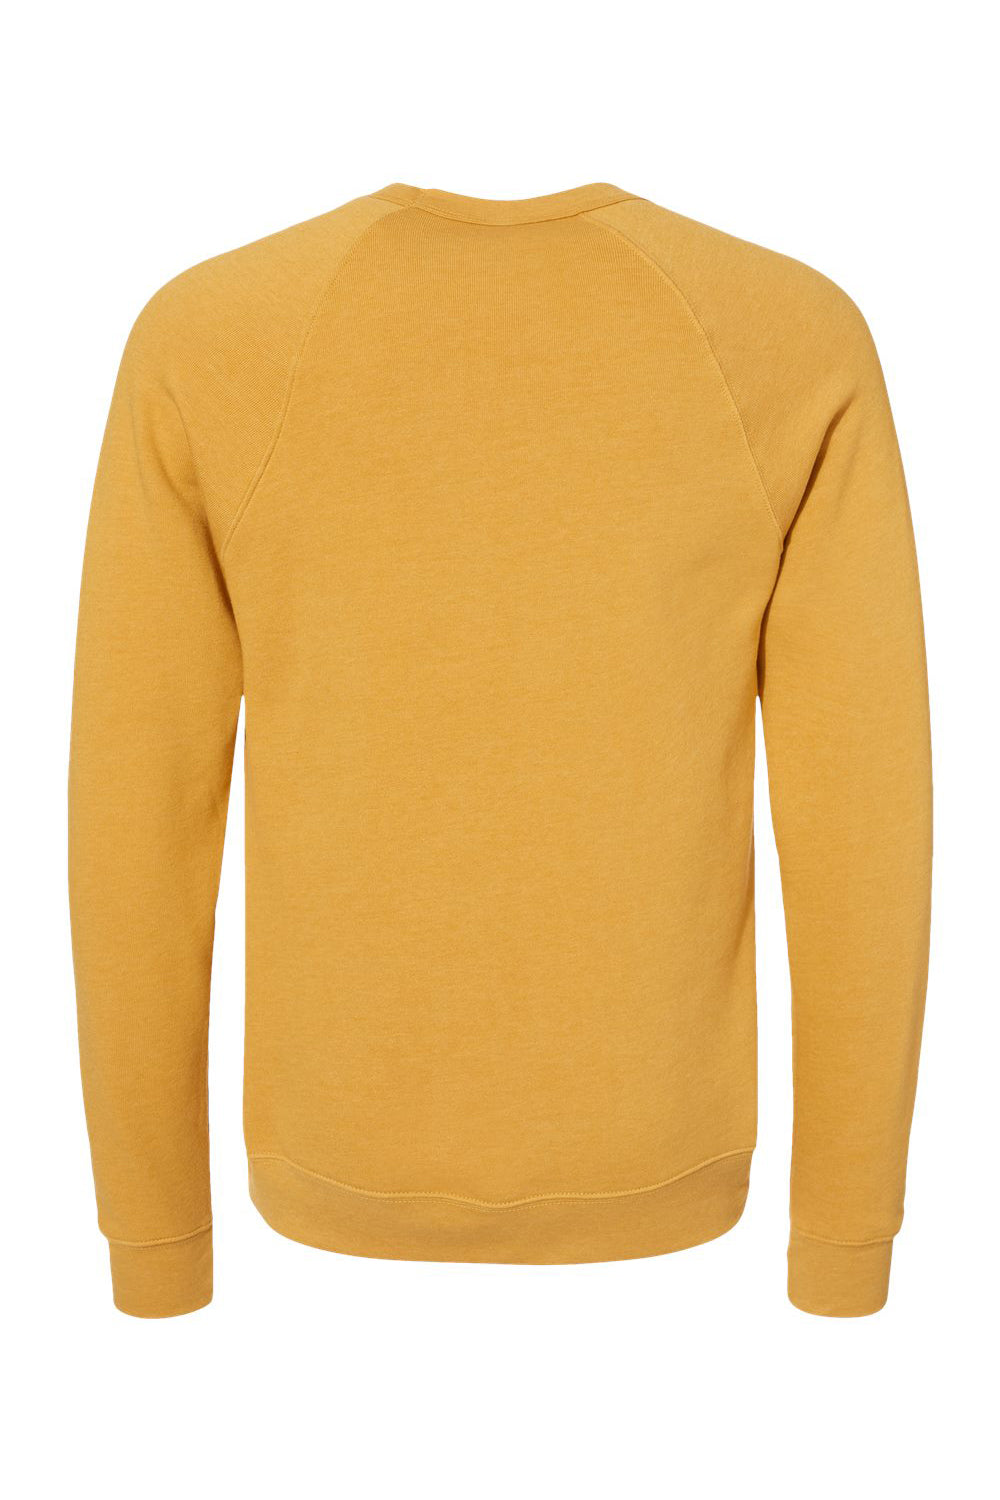 Bella + Canvas BC3901/3901 Mens Sponge Fleece Crewneck Sweatshirt Heather Mustard Yellow Flat Back